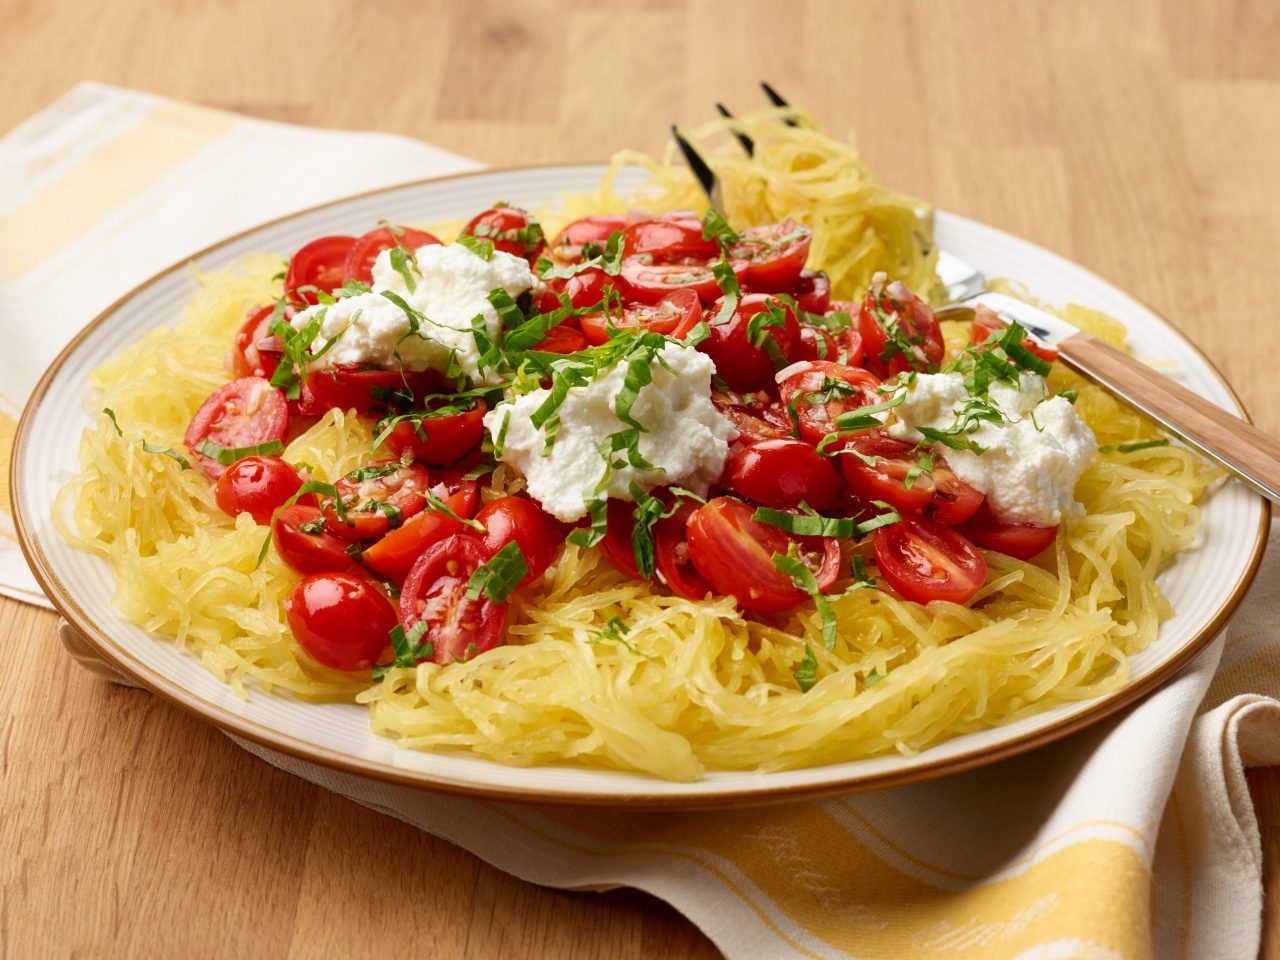 Food Network Kitchen's Spaghetti Squash with Fresh Tomatoes and Ricotta